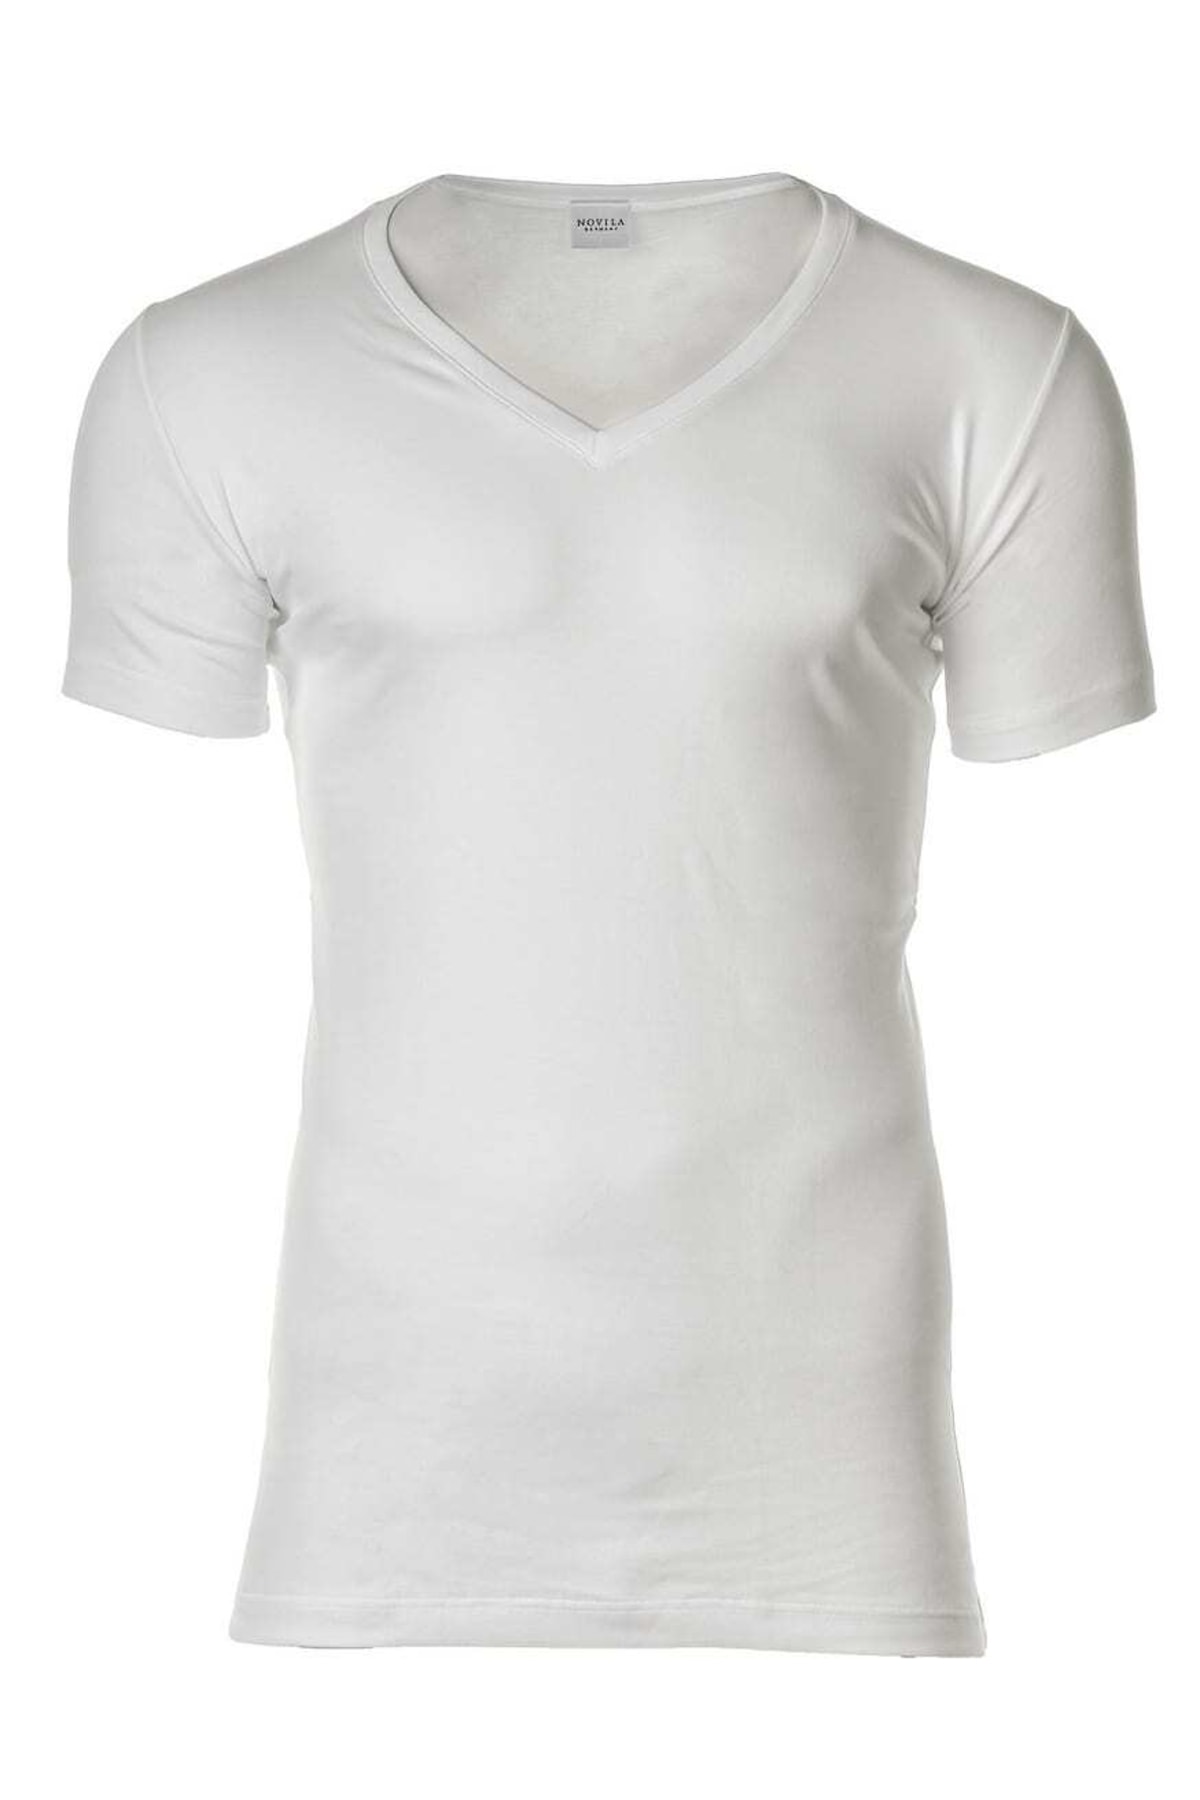 NOVILA T-Shirt Weiß Regular Fit Fast ausverkauft